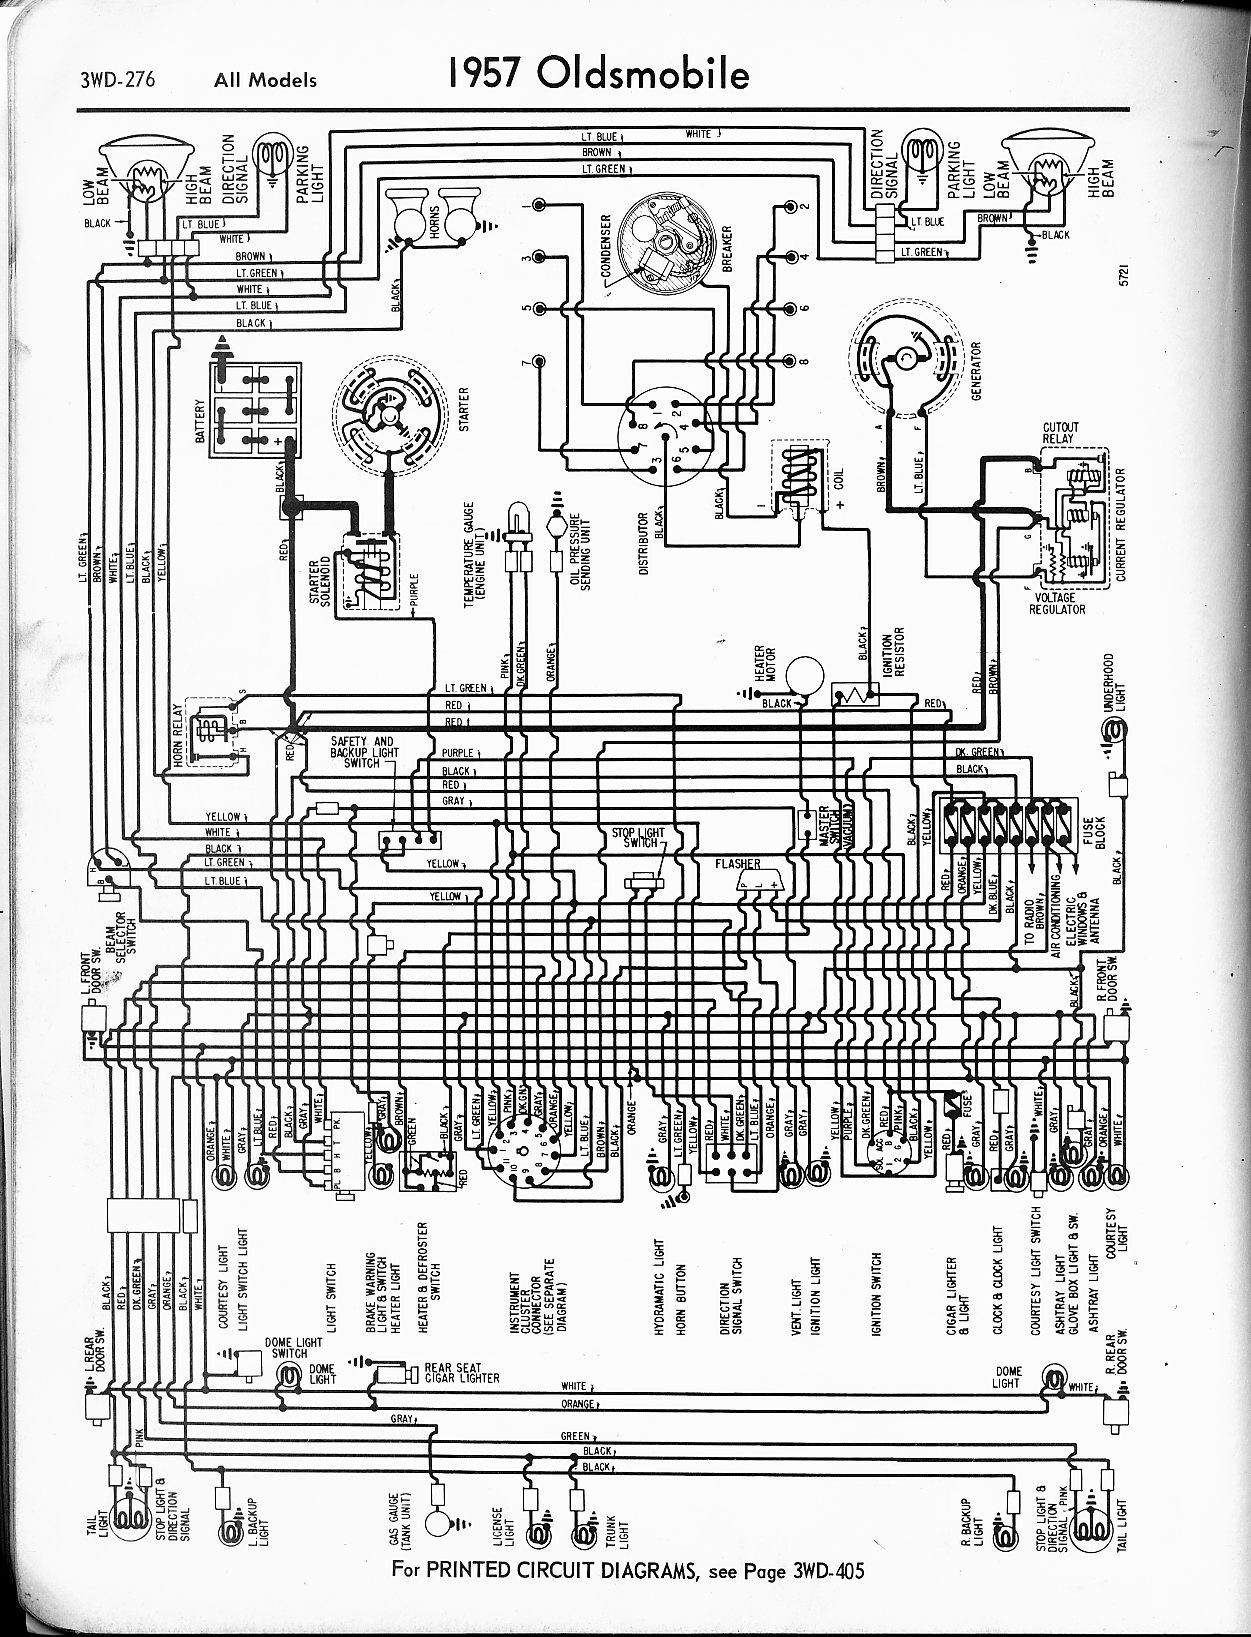 1998 ford Taurus Engine Diagram Ninety Eight Wiring Diagram Get Free Image About Wiring Diagram Of 1998 ford Taurus Engine Diagram